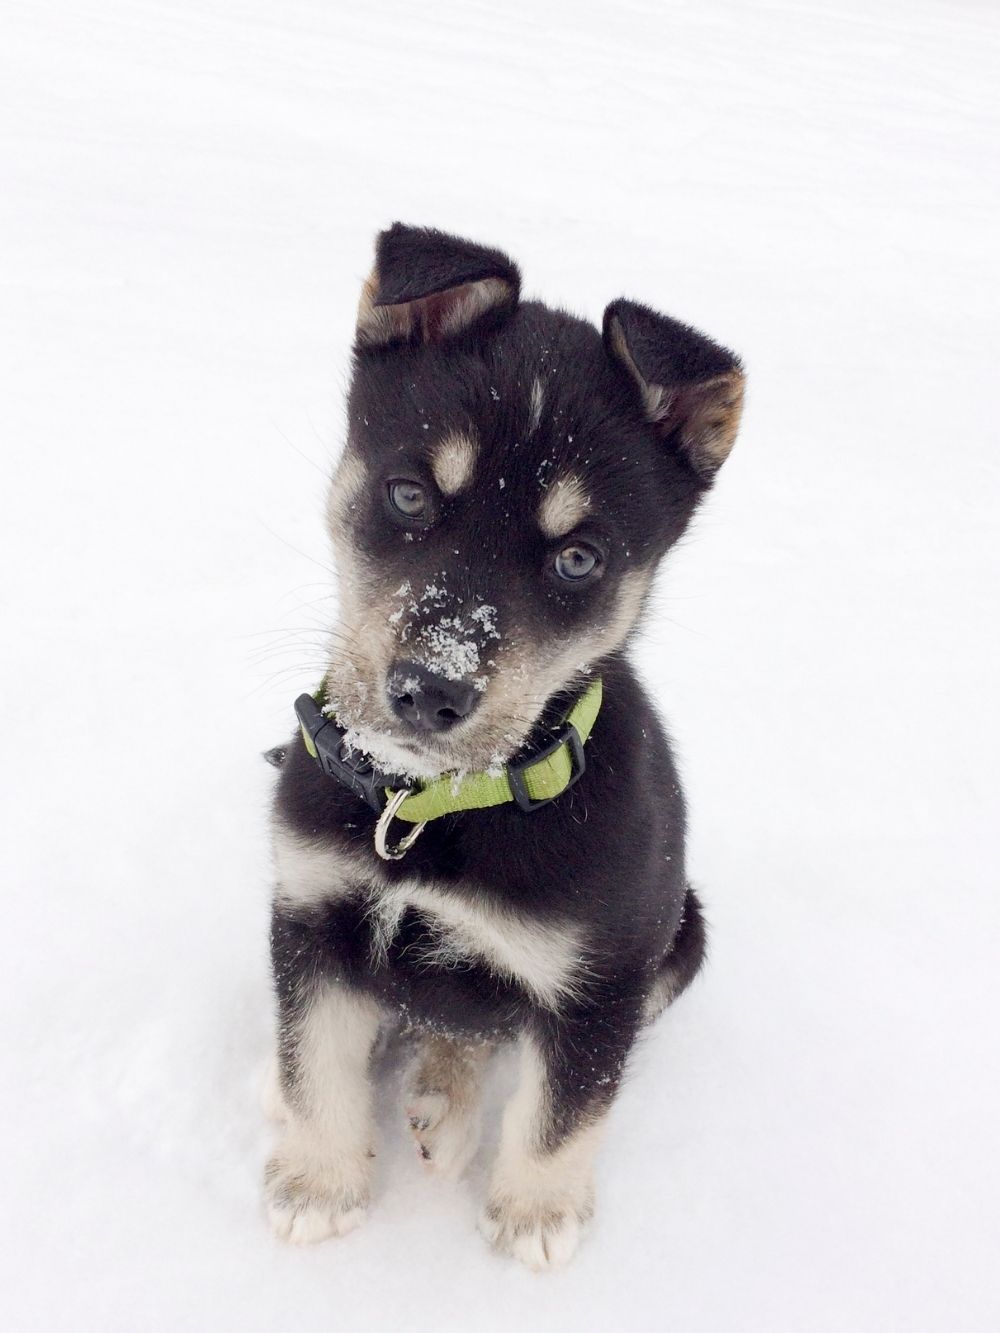 Lab and Husky Mix Puppy Sitting on Snow